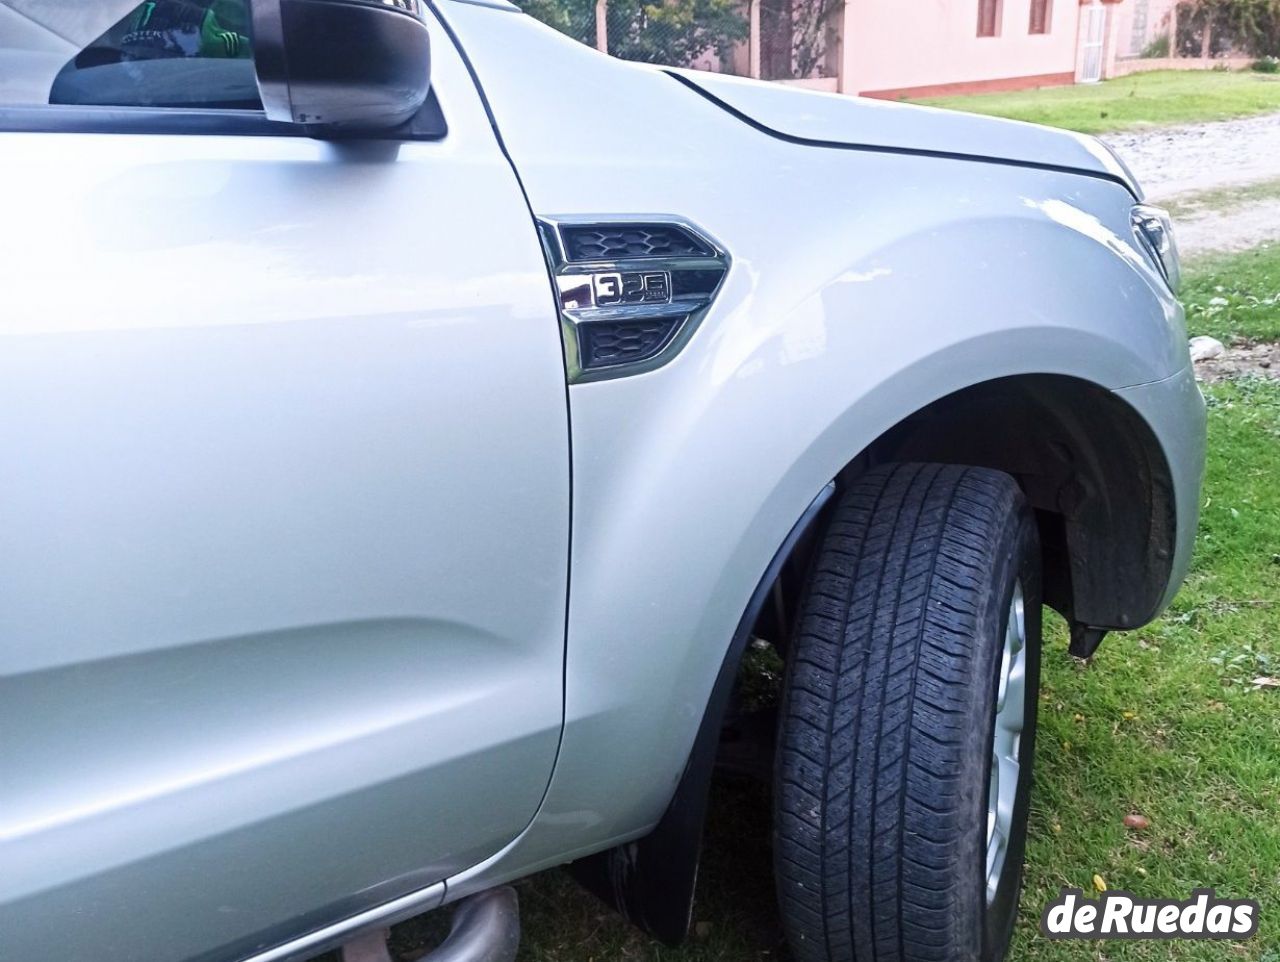 Ford Ranger Usada en Tucumán, deRuedas